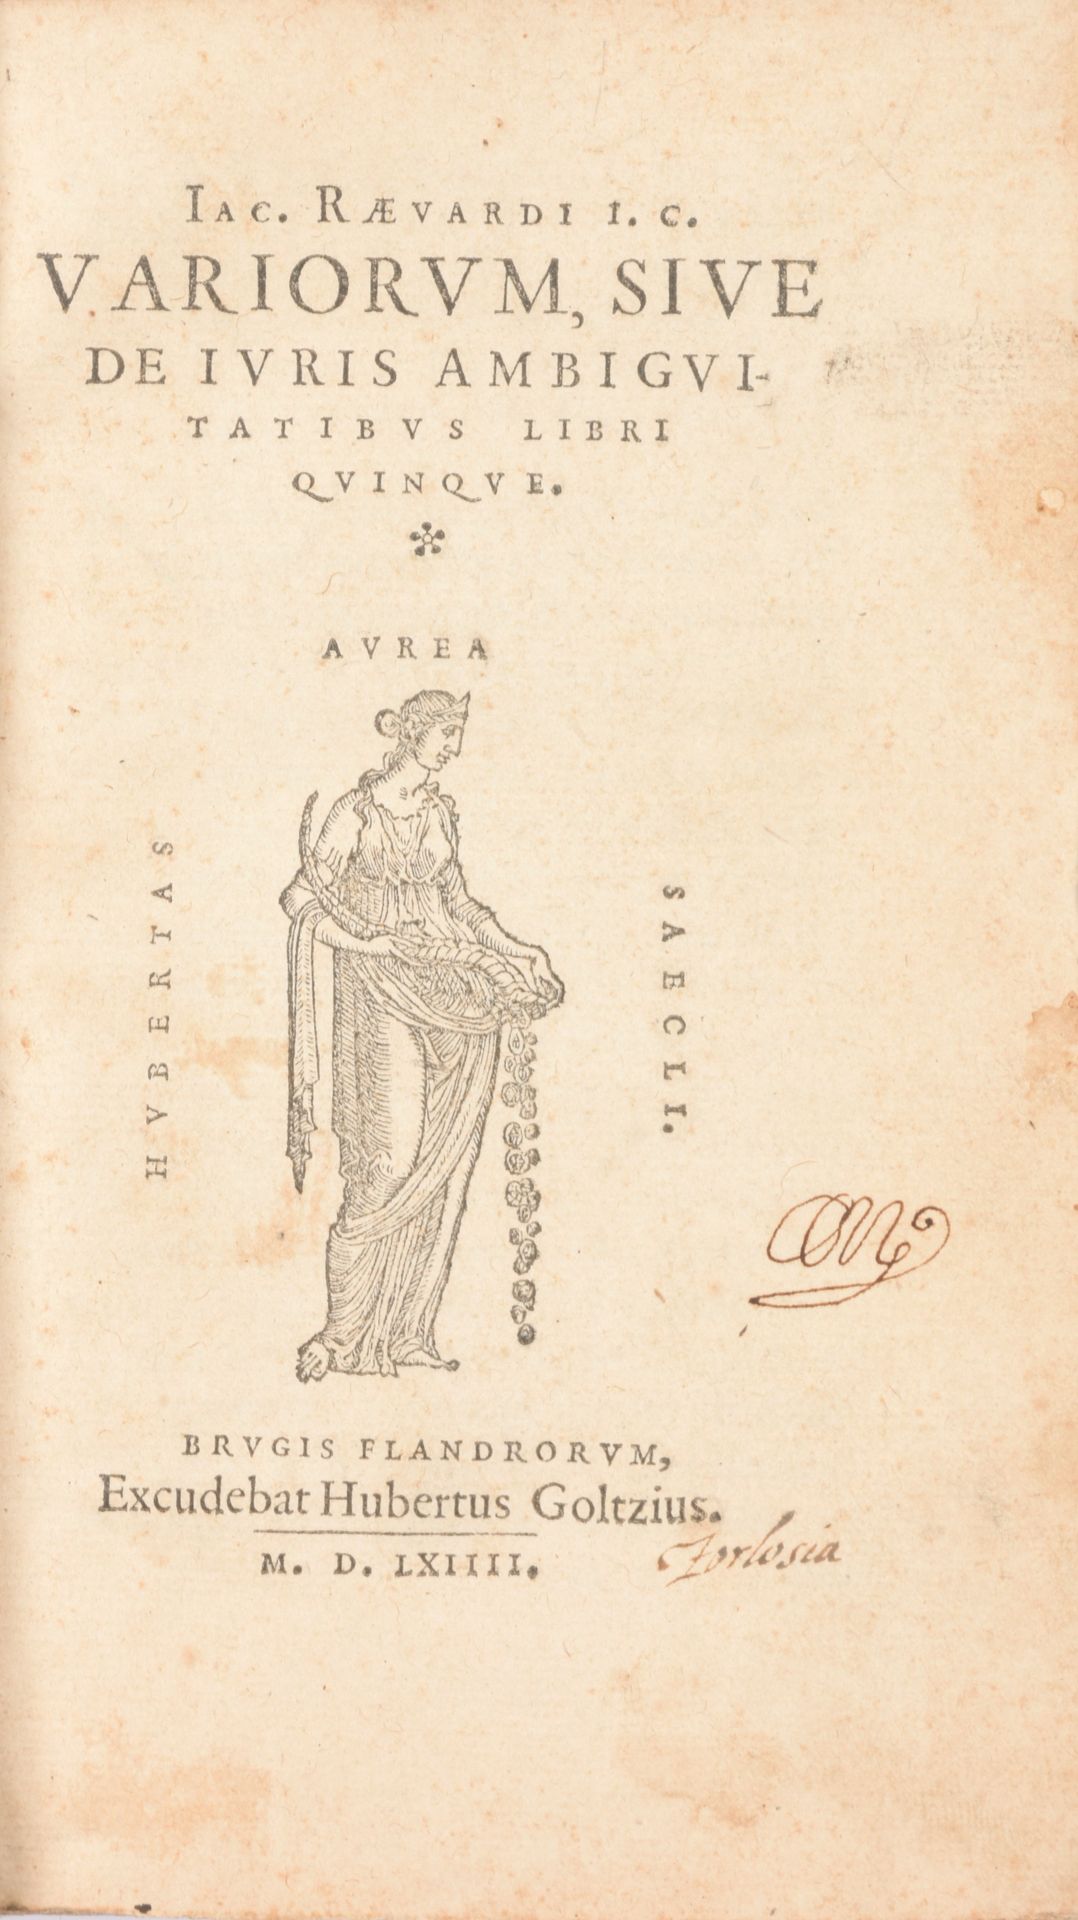 RAEVARDUS, Jacobus Variorvm, sive De ivris ambigvitatibvs libri qvinqve

8vo，333&hellip;